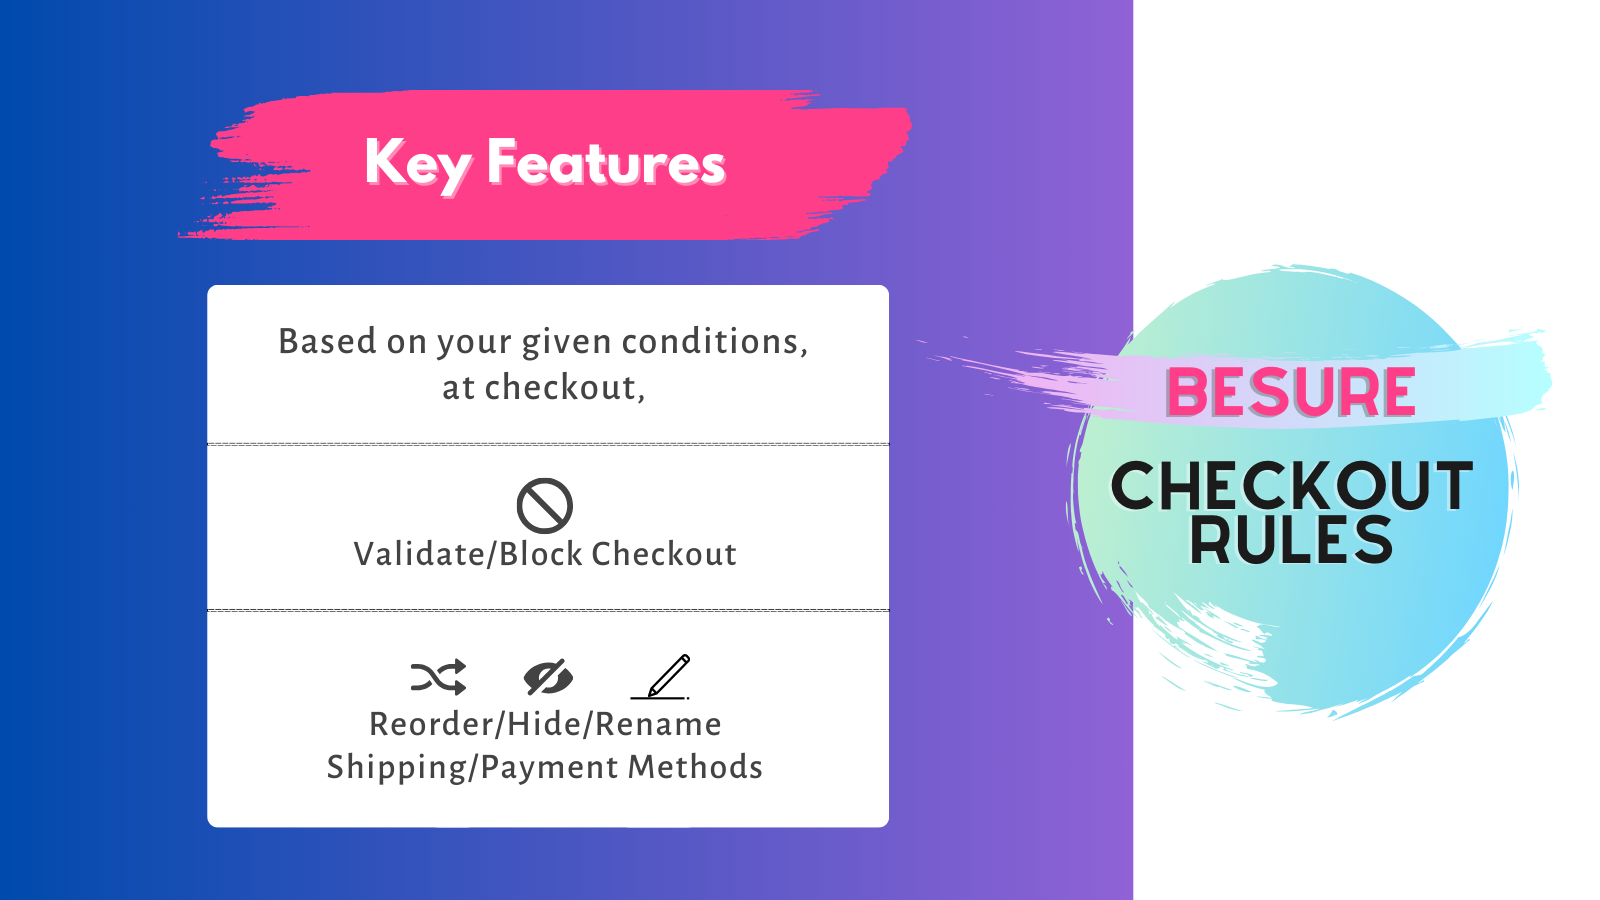 Hauptfunktionen der Checkout-Regeln-App